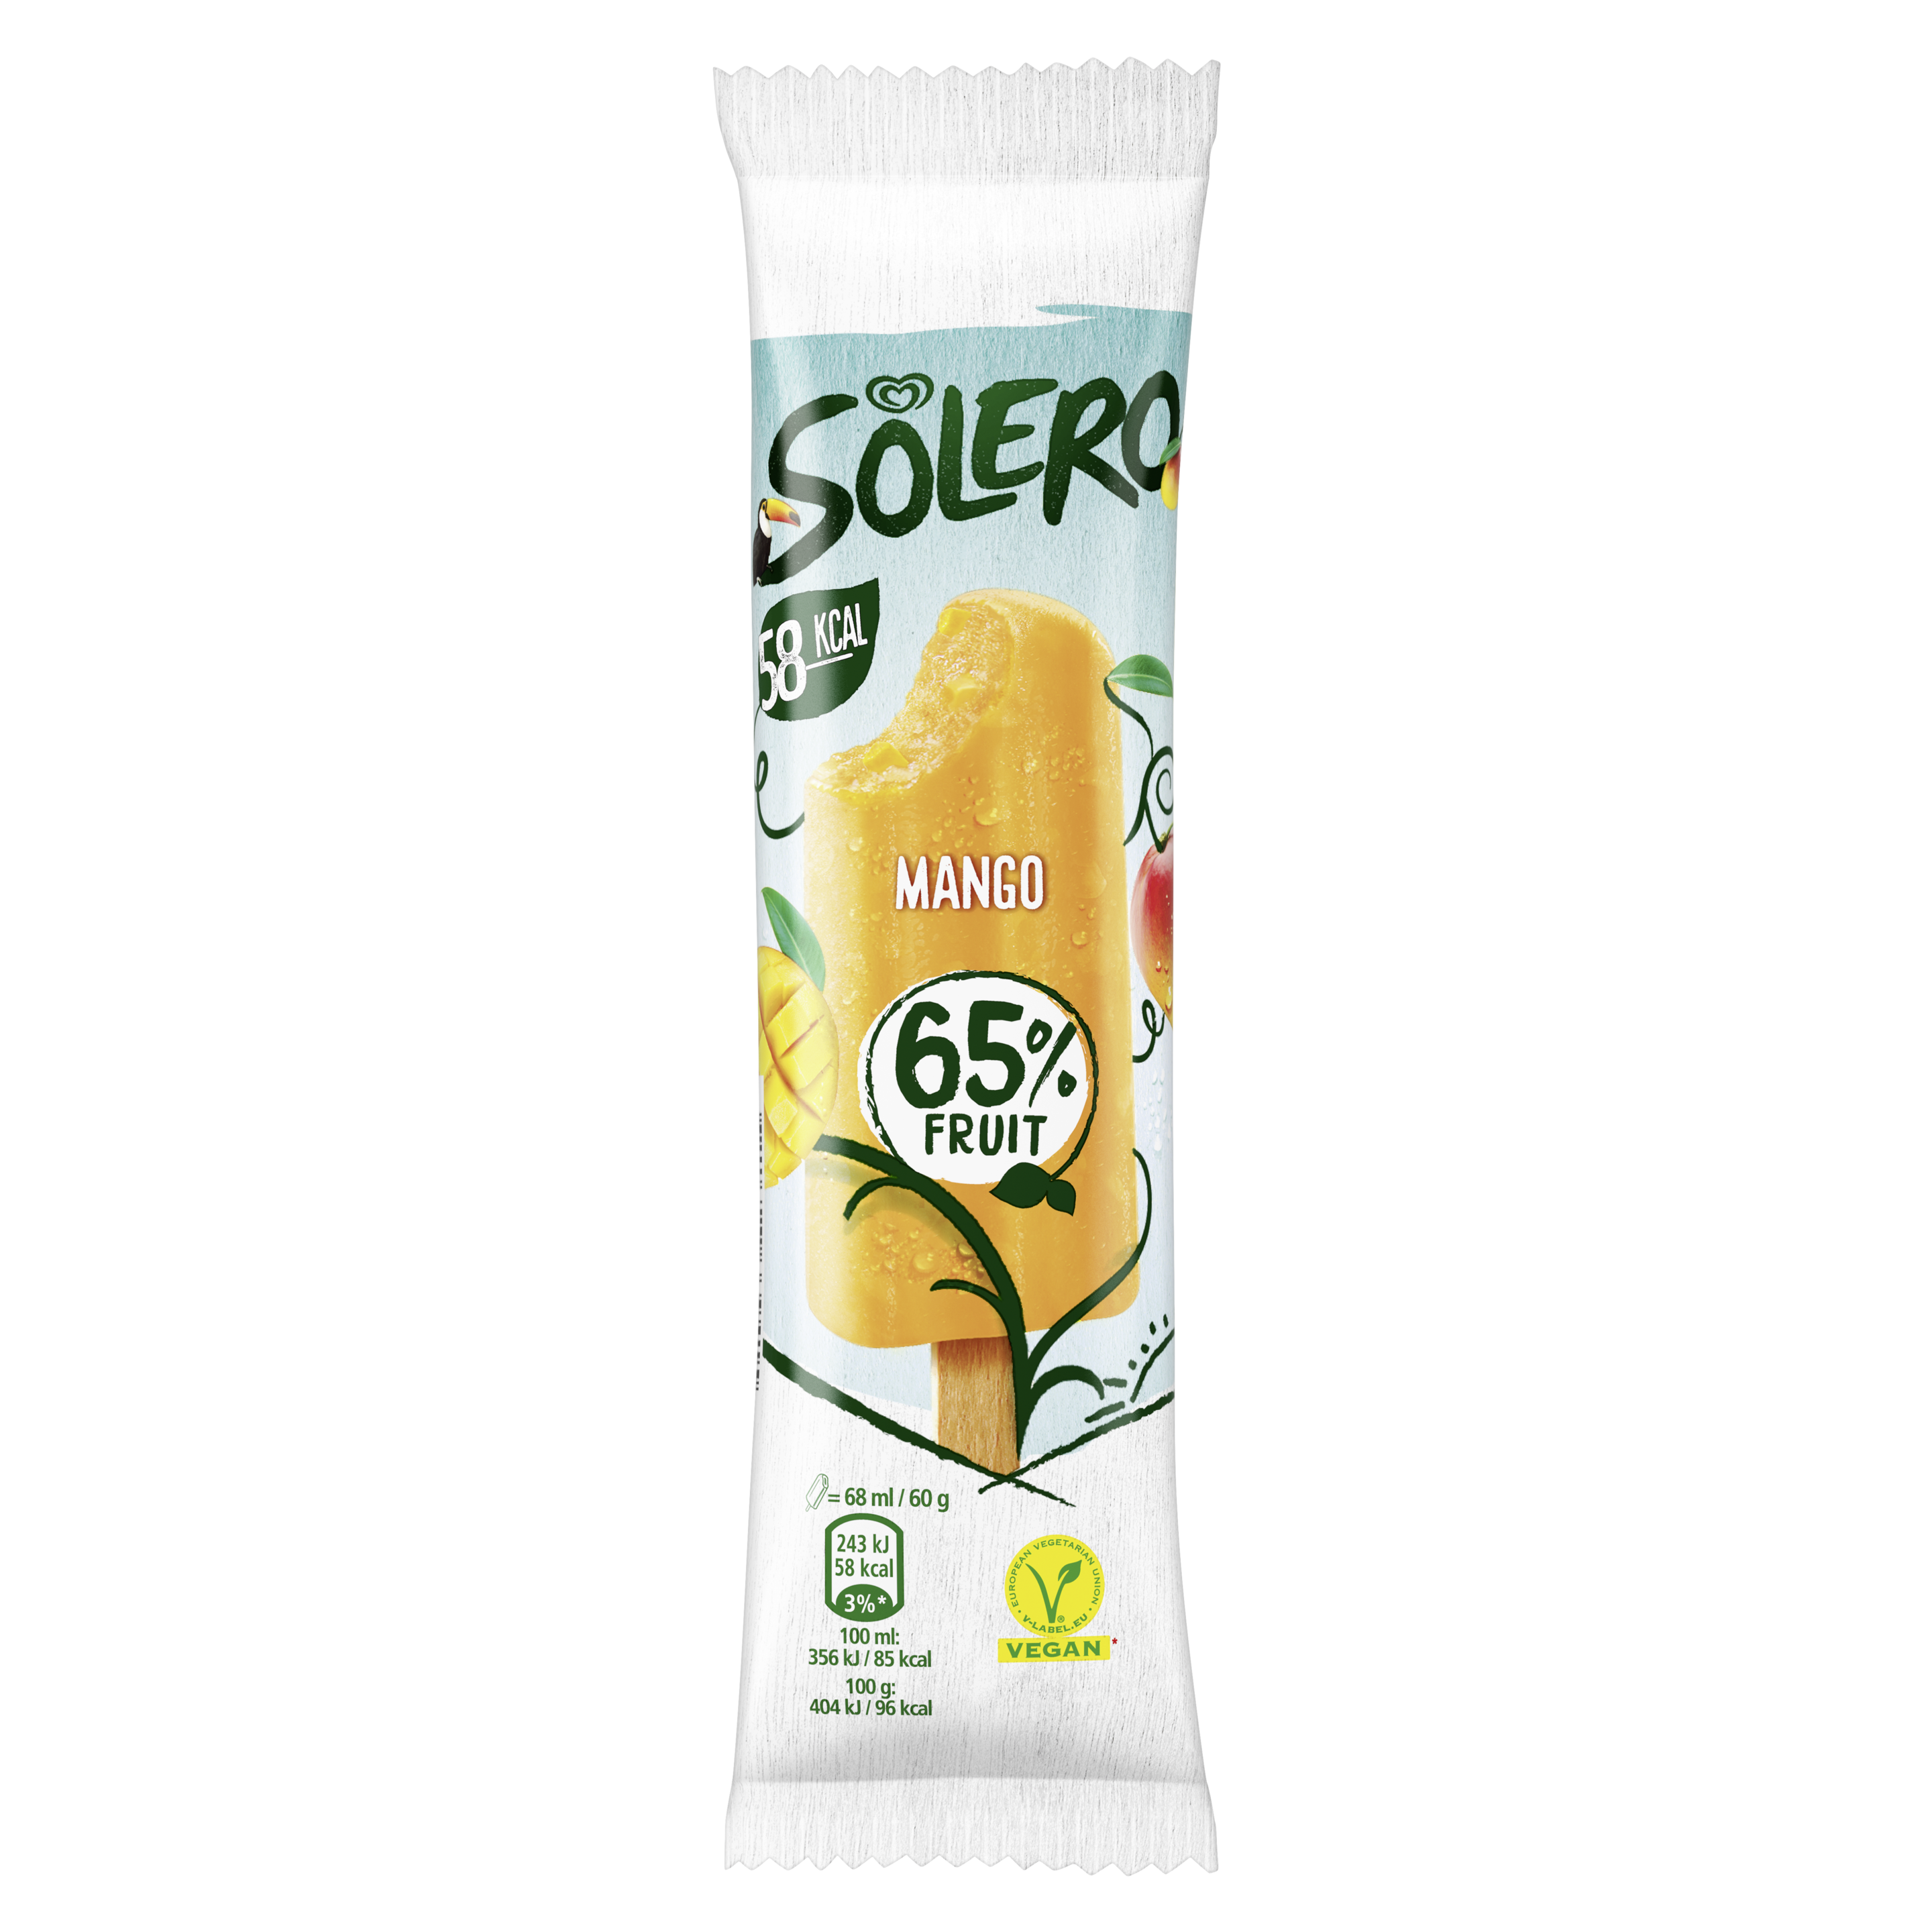 Solero Mango 65% 68ml